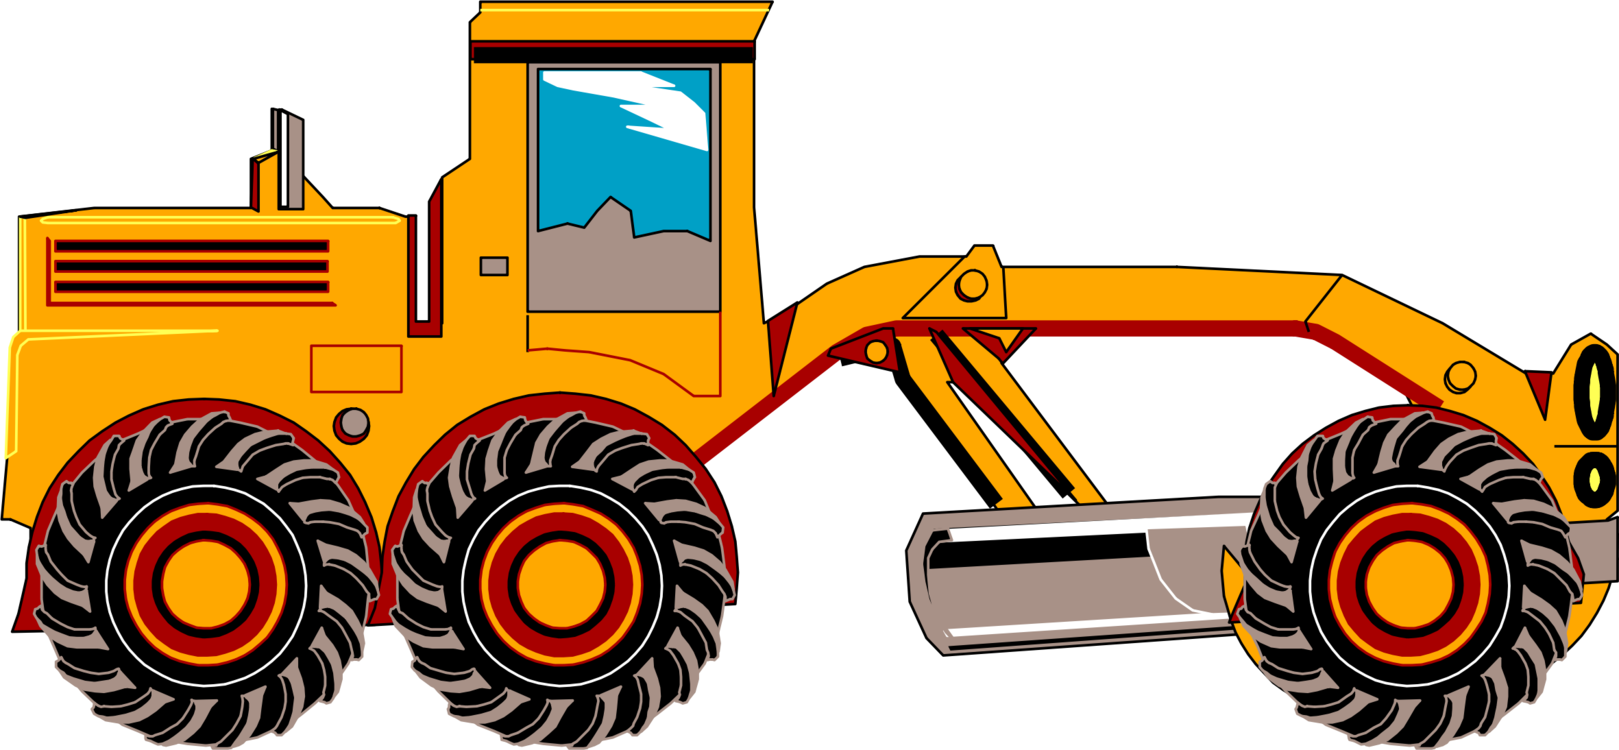 Machine,Construction Equipment,Car